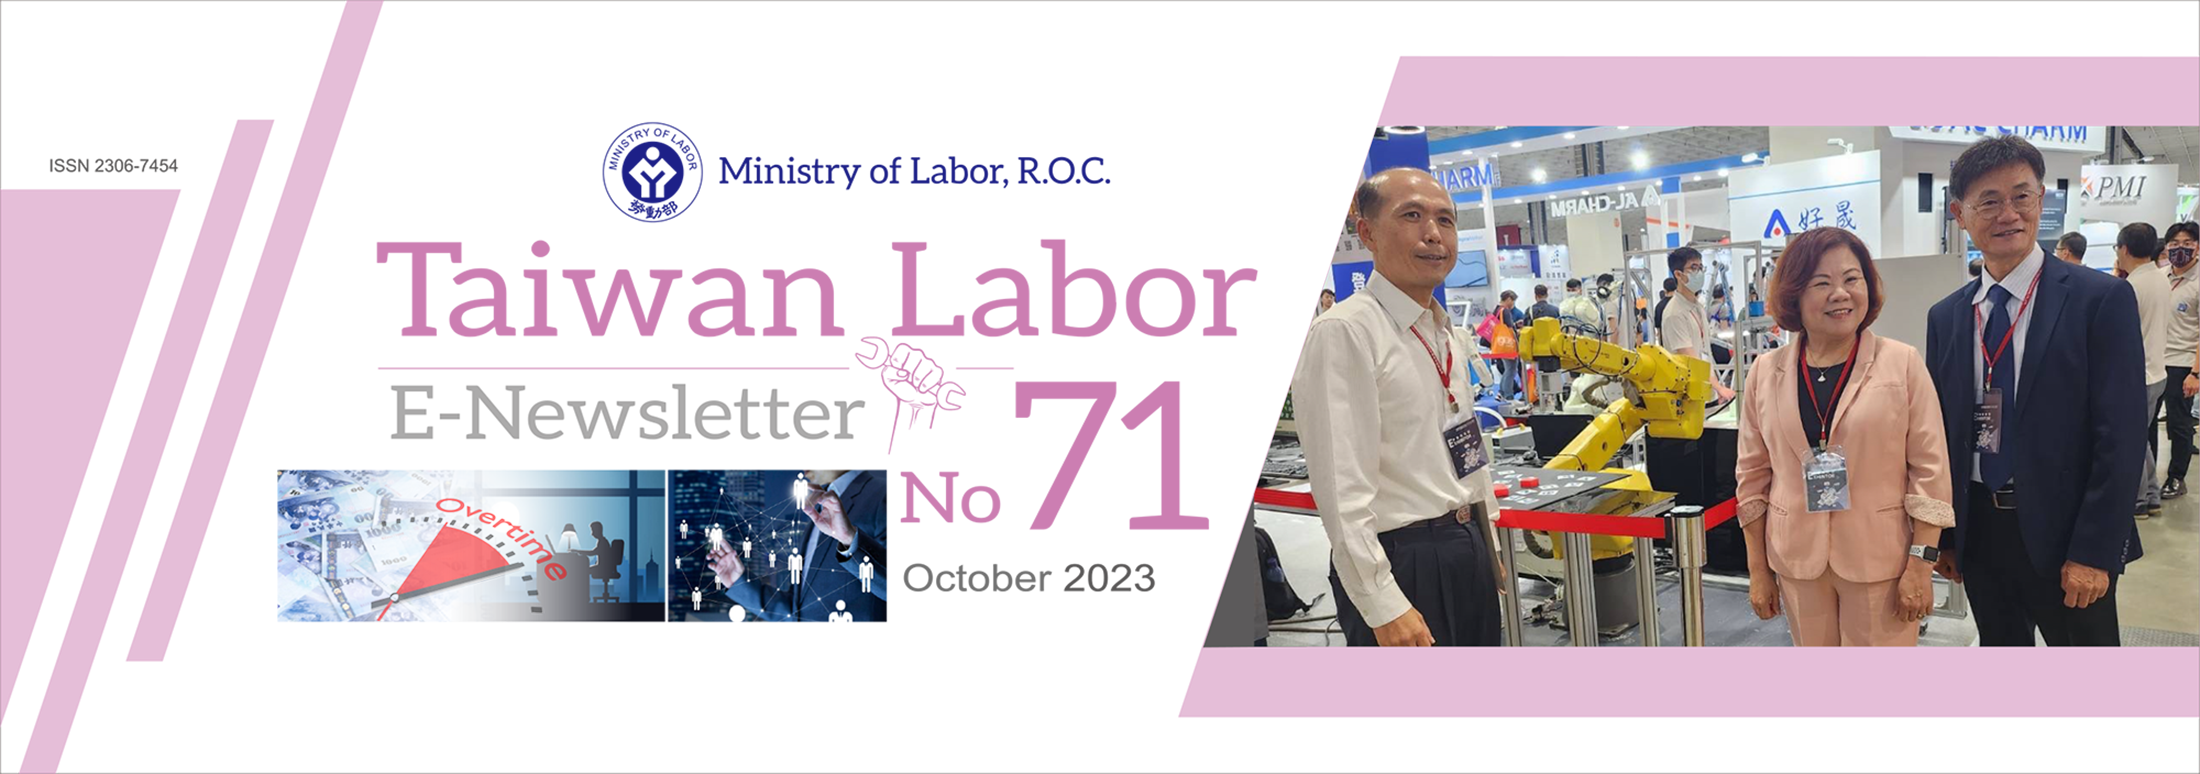 Taiwan Labor E-Newsletter No.71 Banner